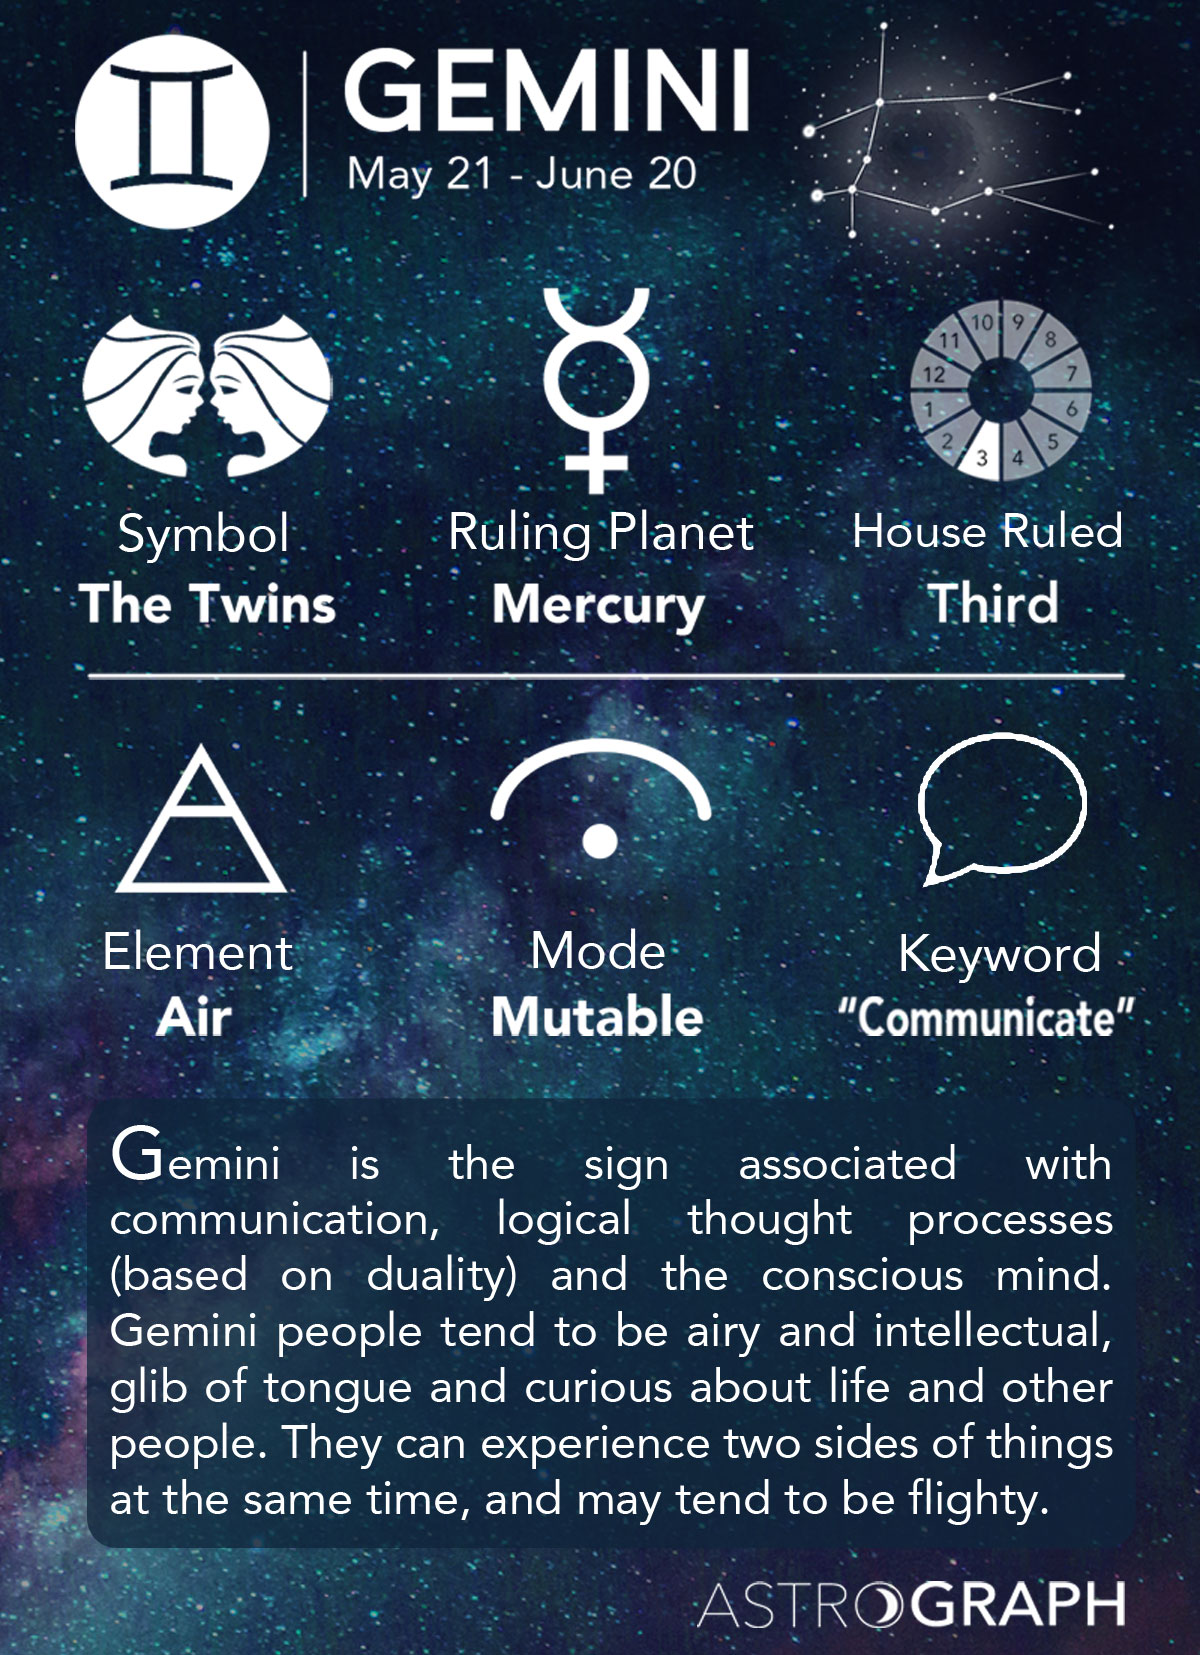 What Is Gemini?